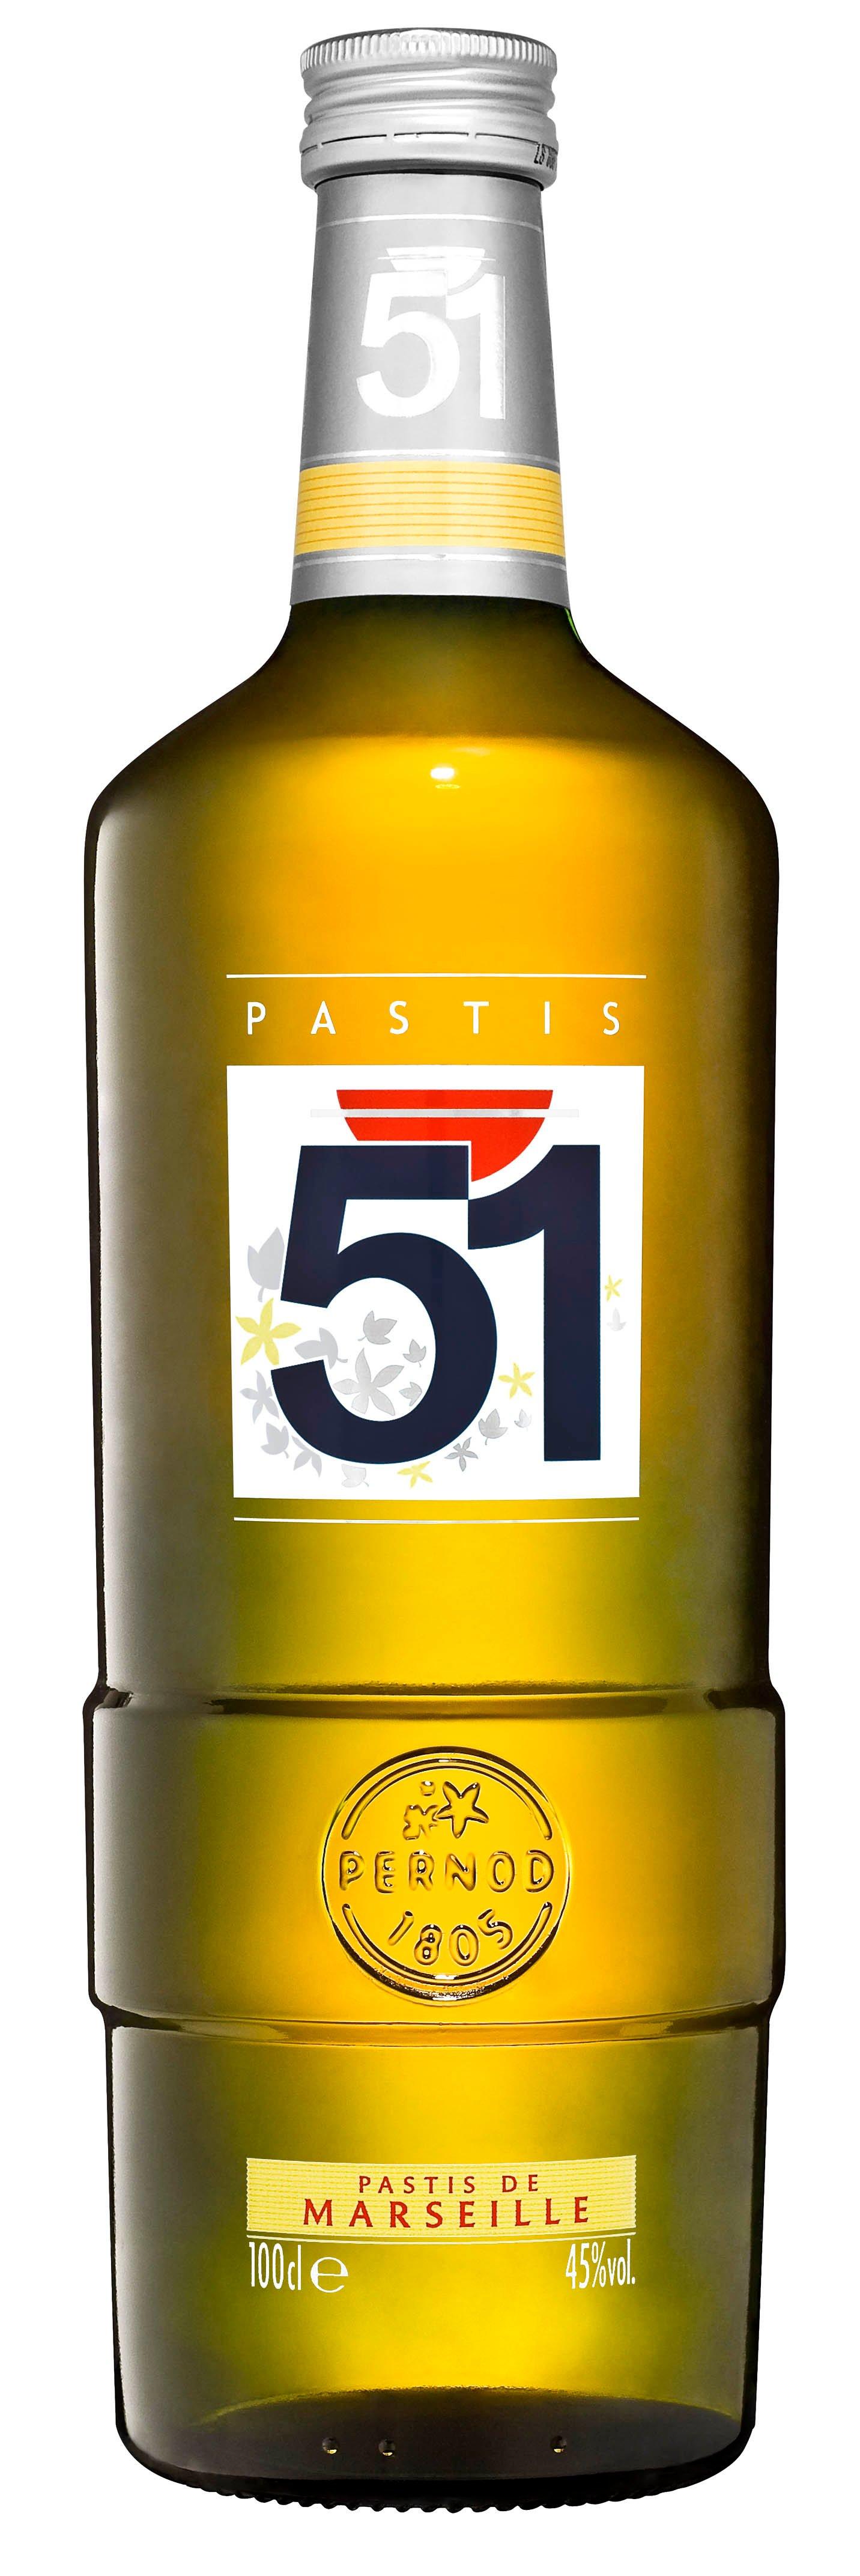 Image of Pastis 51 Pastis - 100cl